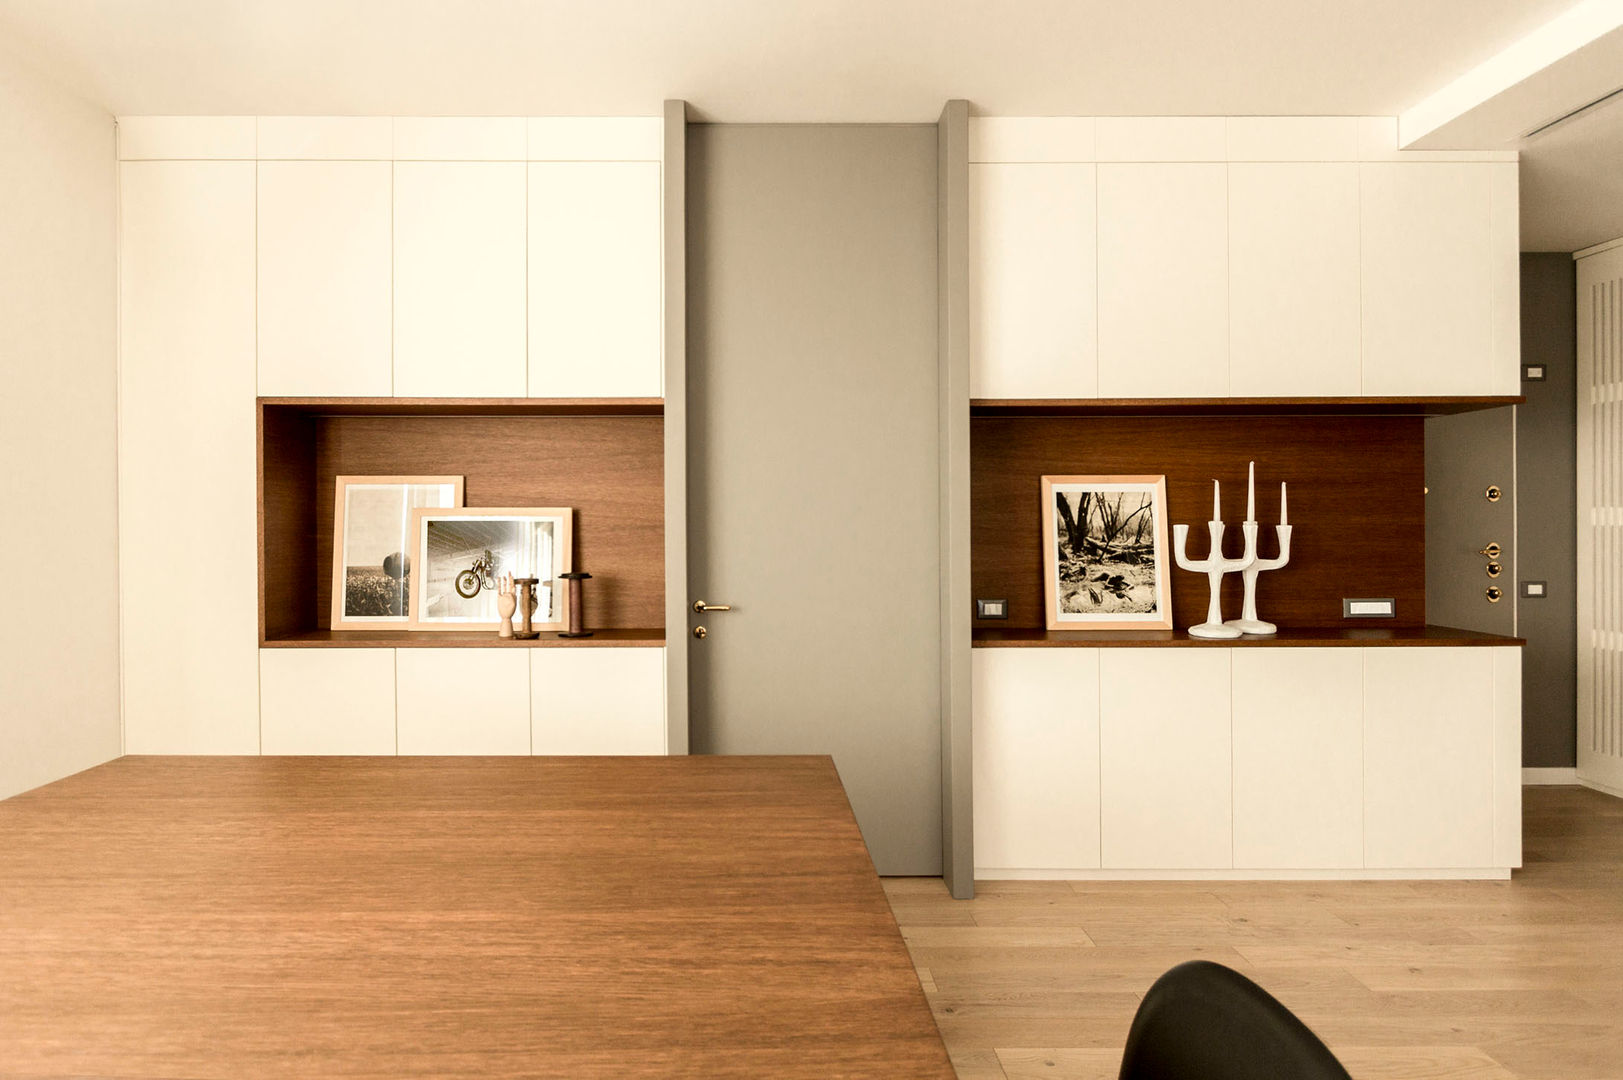 Appartamento Residenziale - Cernobbio 2015, Galleria del Vento Galleria del Vento Living room